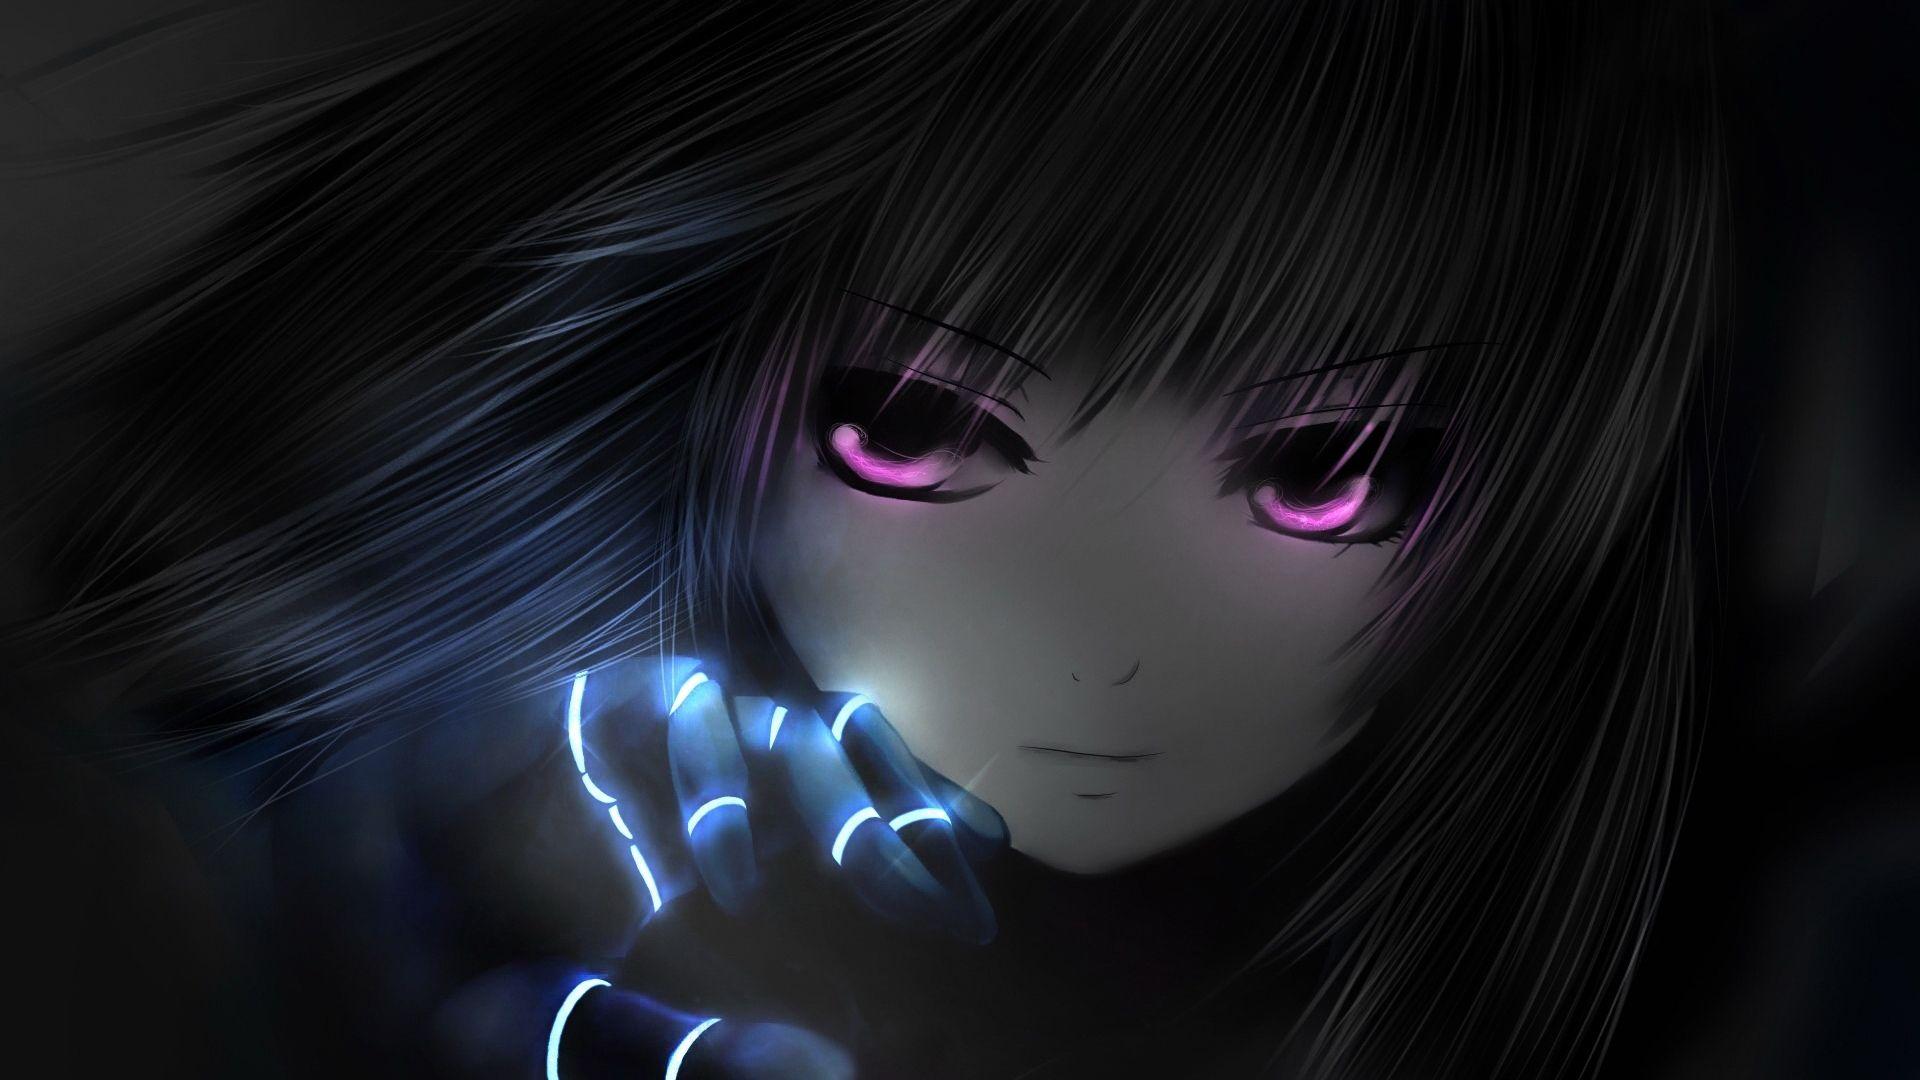 Dark anime - Anime Girls Wallpapers and Images - Desktop Nexus Groups